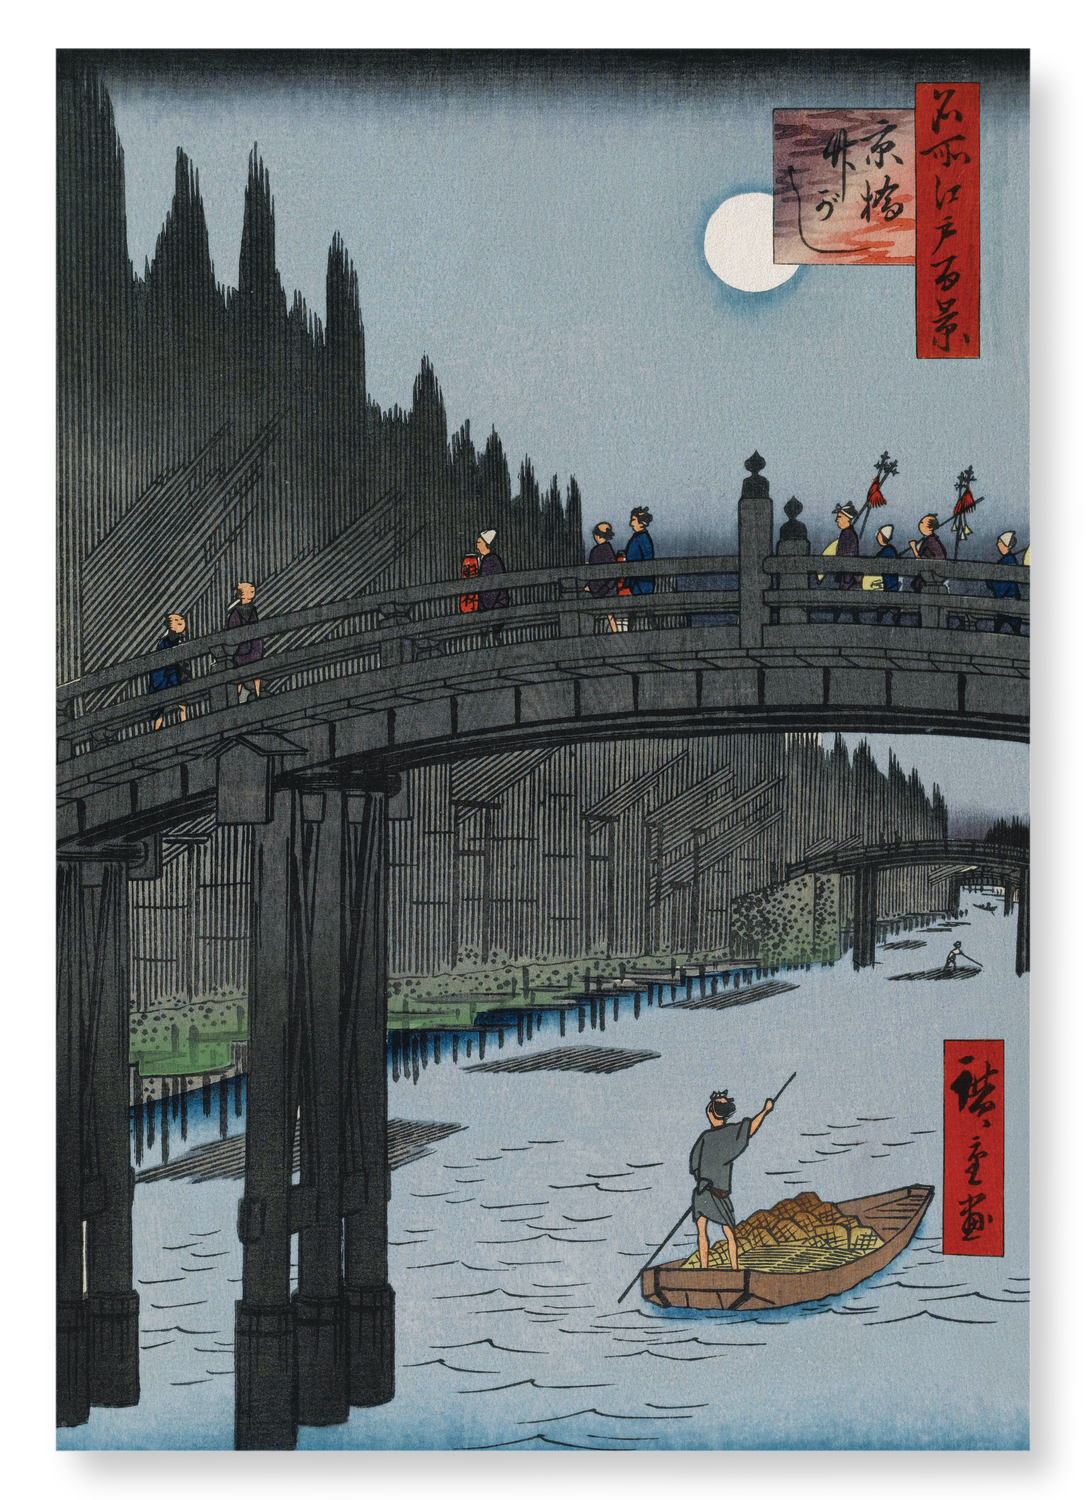 BAMBOO QUAY BY KYOBASHI BRIDGE (1857)